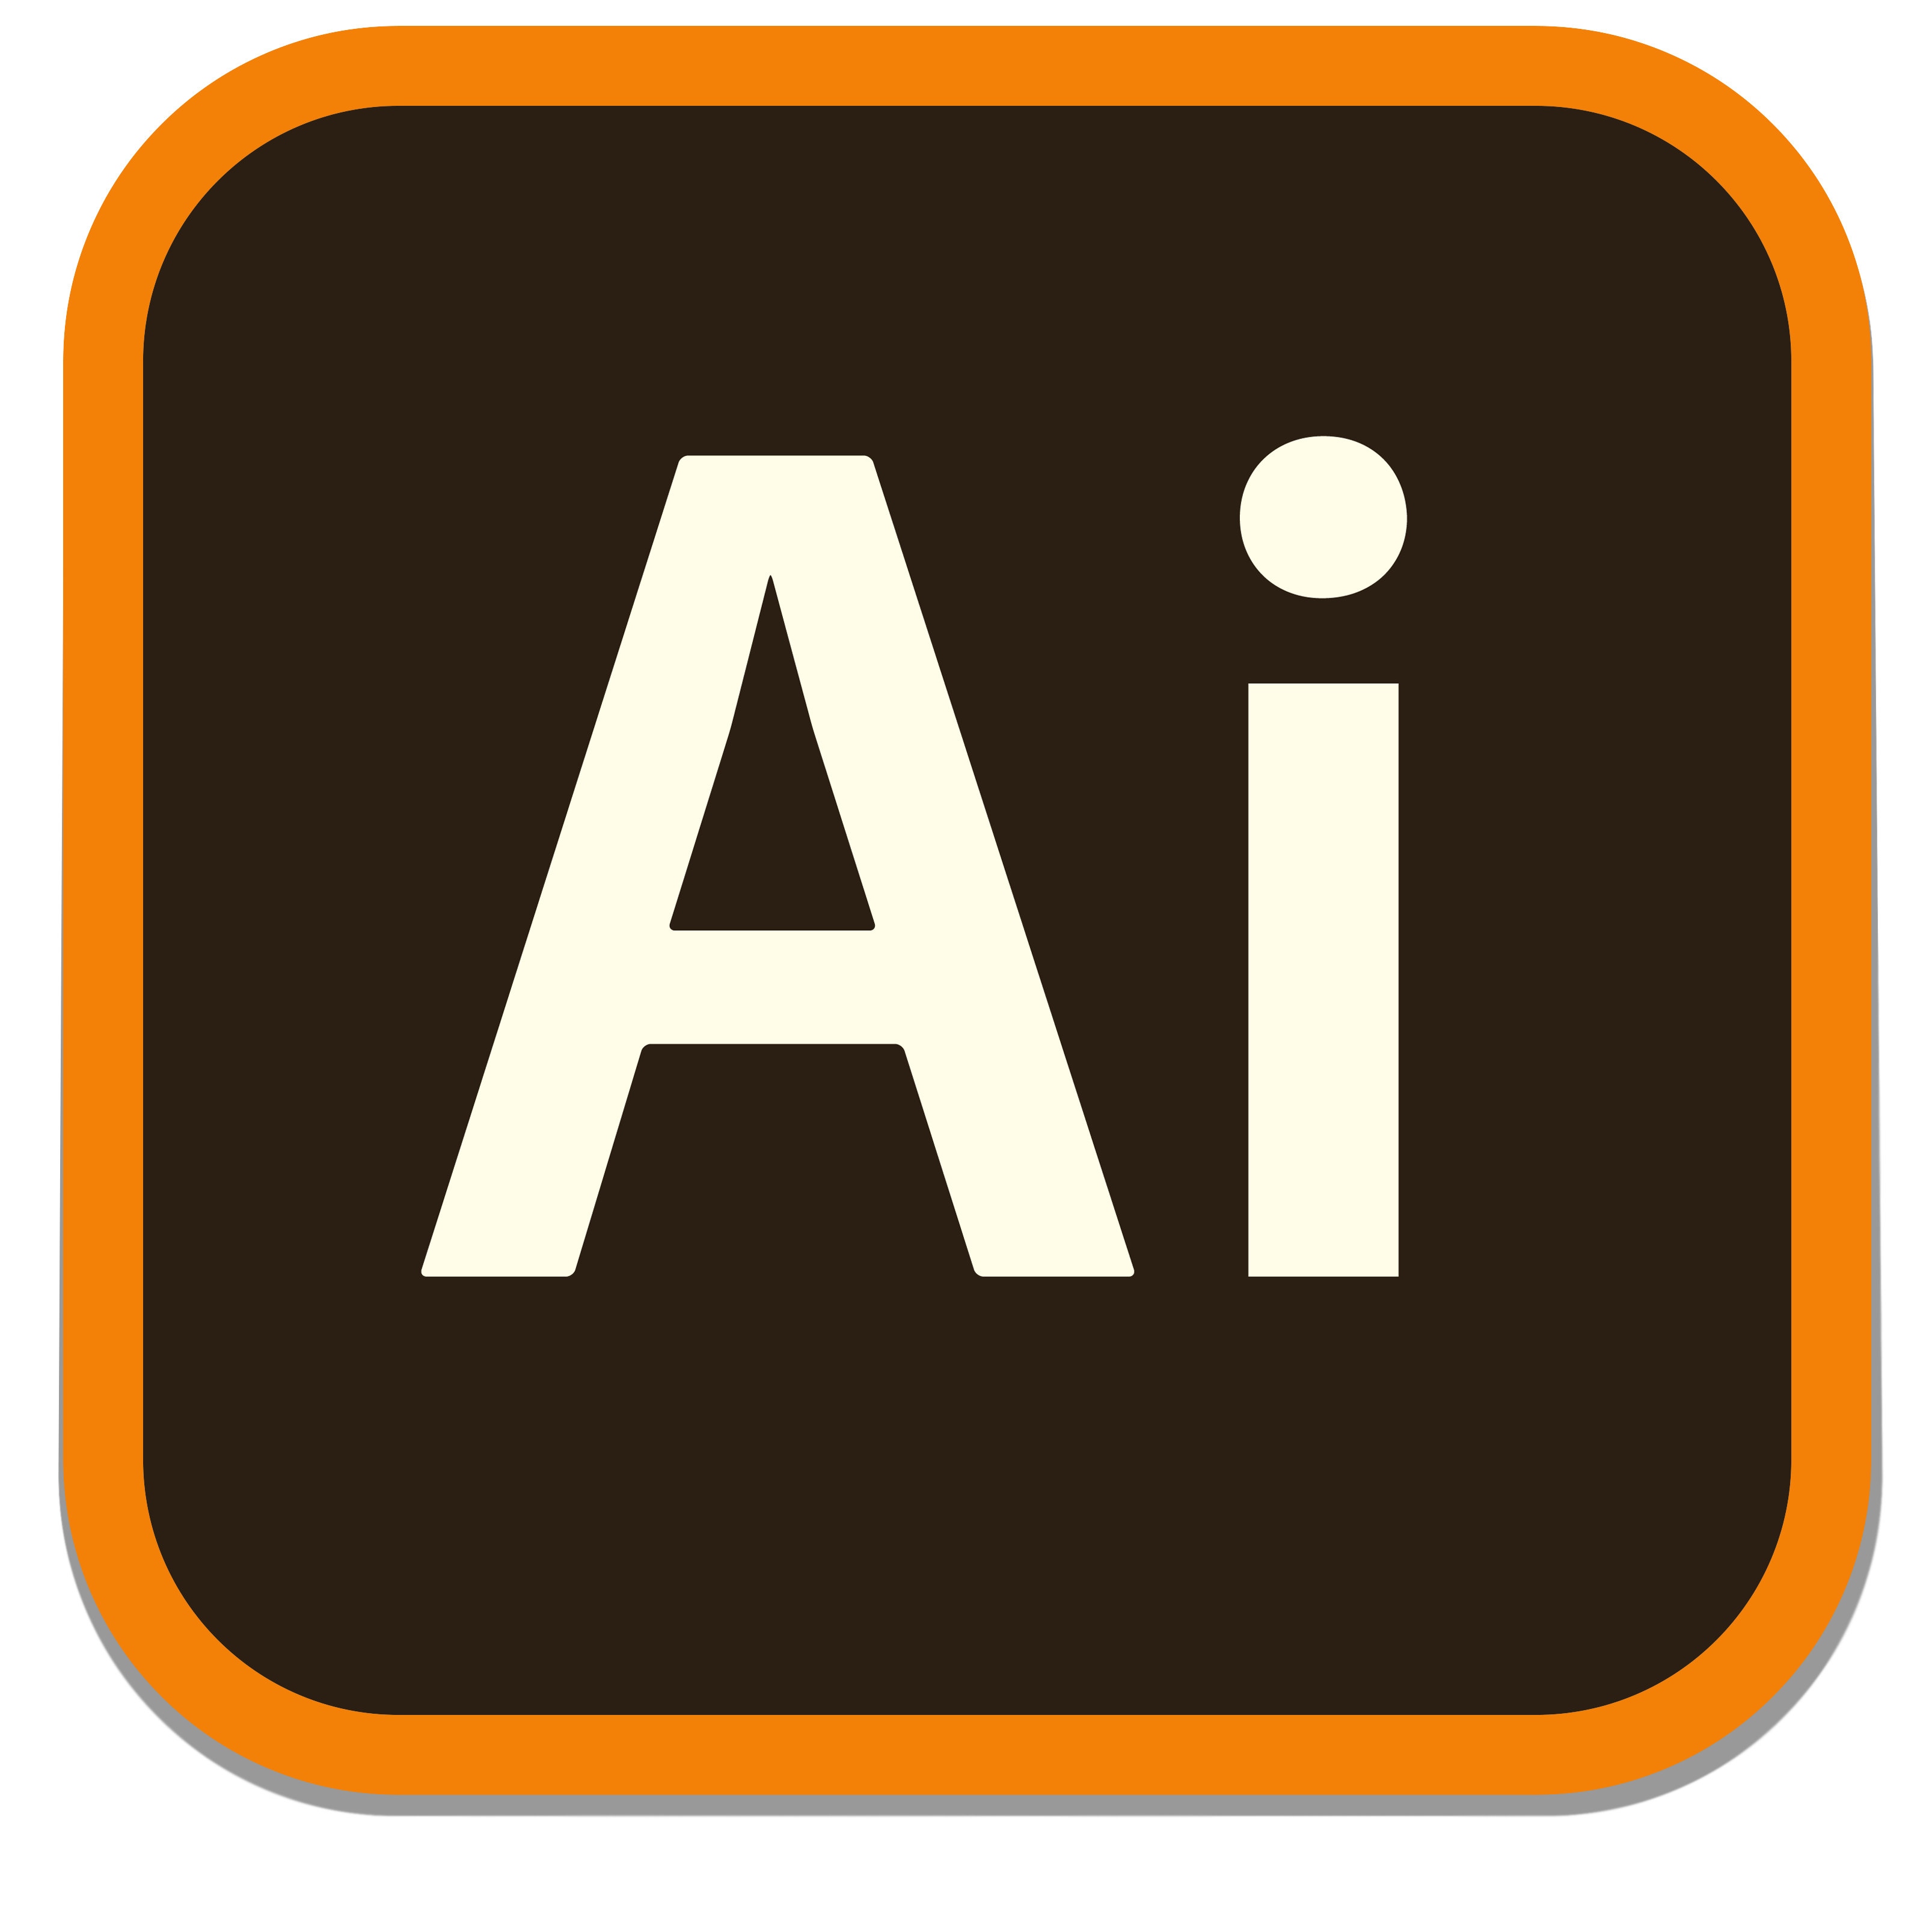 Ai icon. Значок Adobe Illustrator. Adobe иллюстратор иконка. Adobe Illustrator логотип PNG. Адобе иллюстратор ярлык.